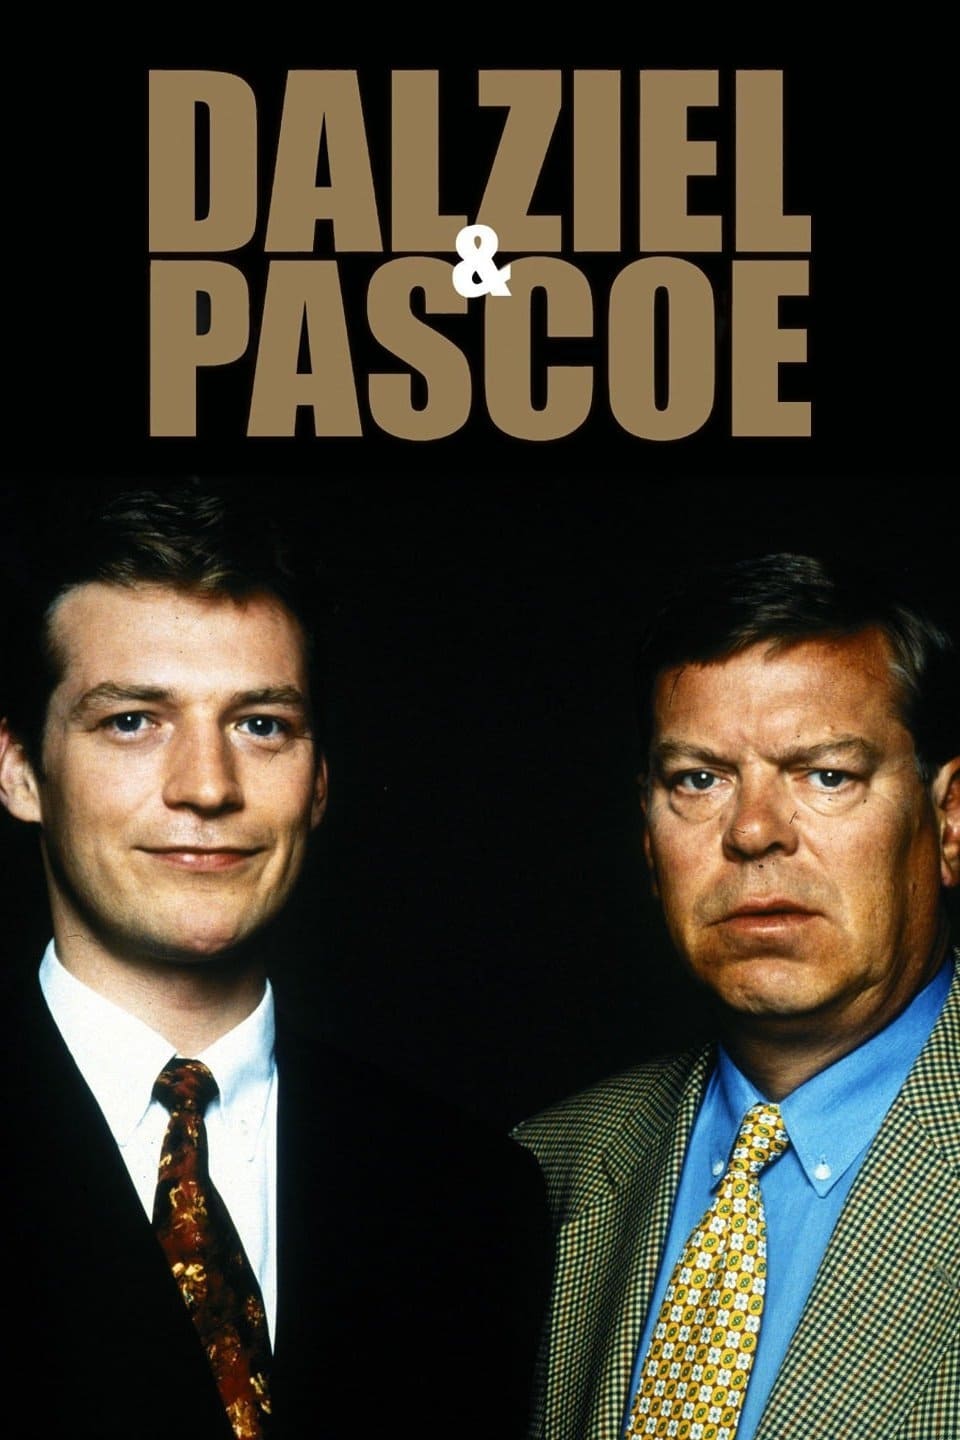 Dalziel and Pascoe (1996)